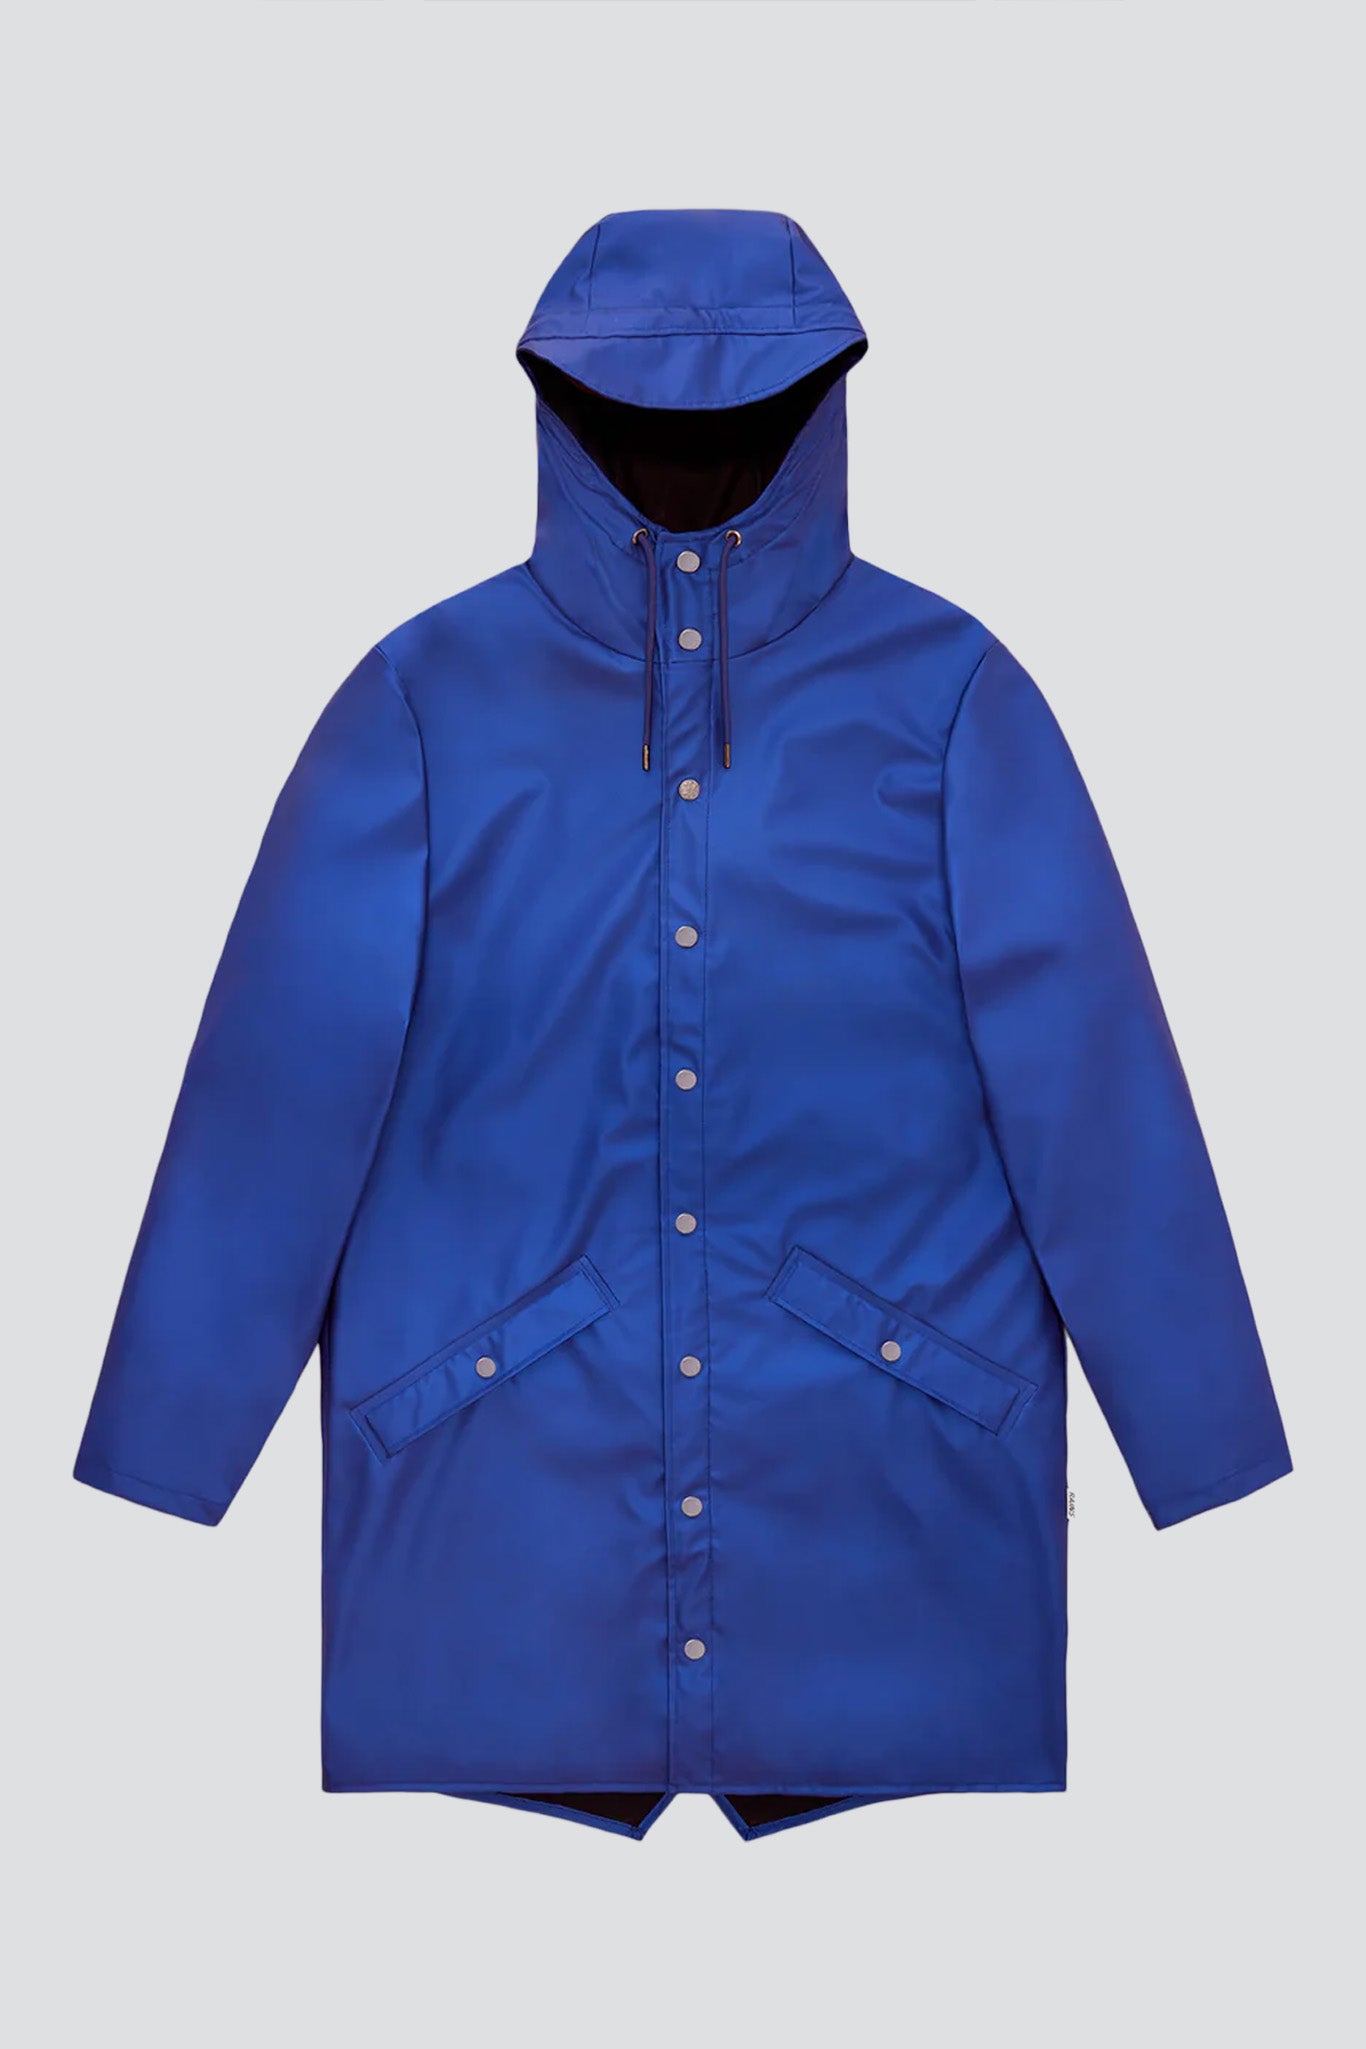 Storm Blue Hooded Rain Long Jacket